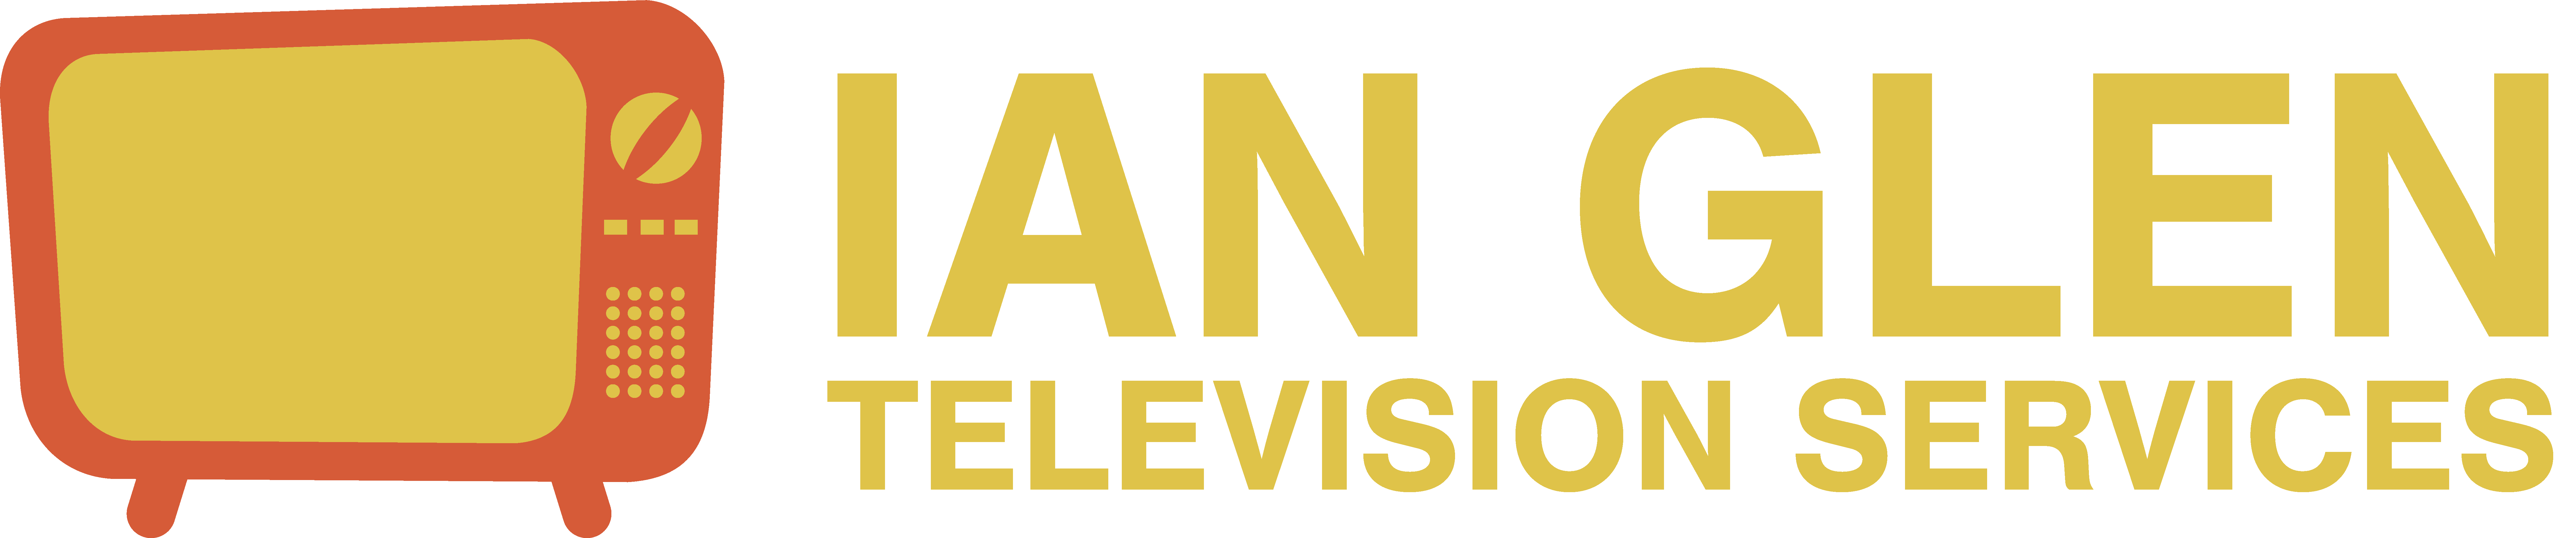 ian glen television services